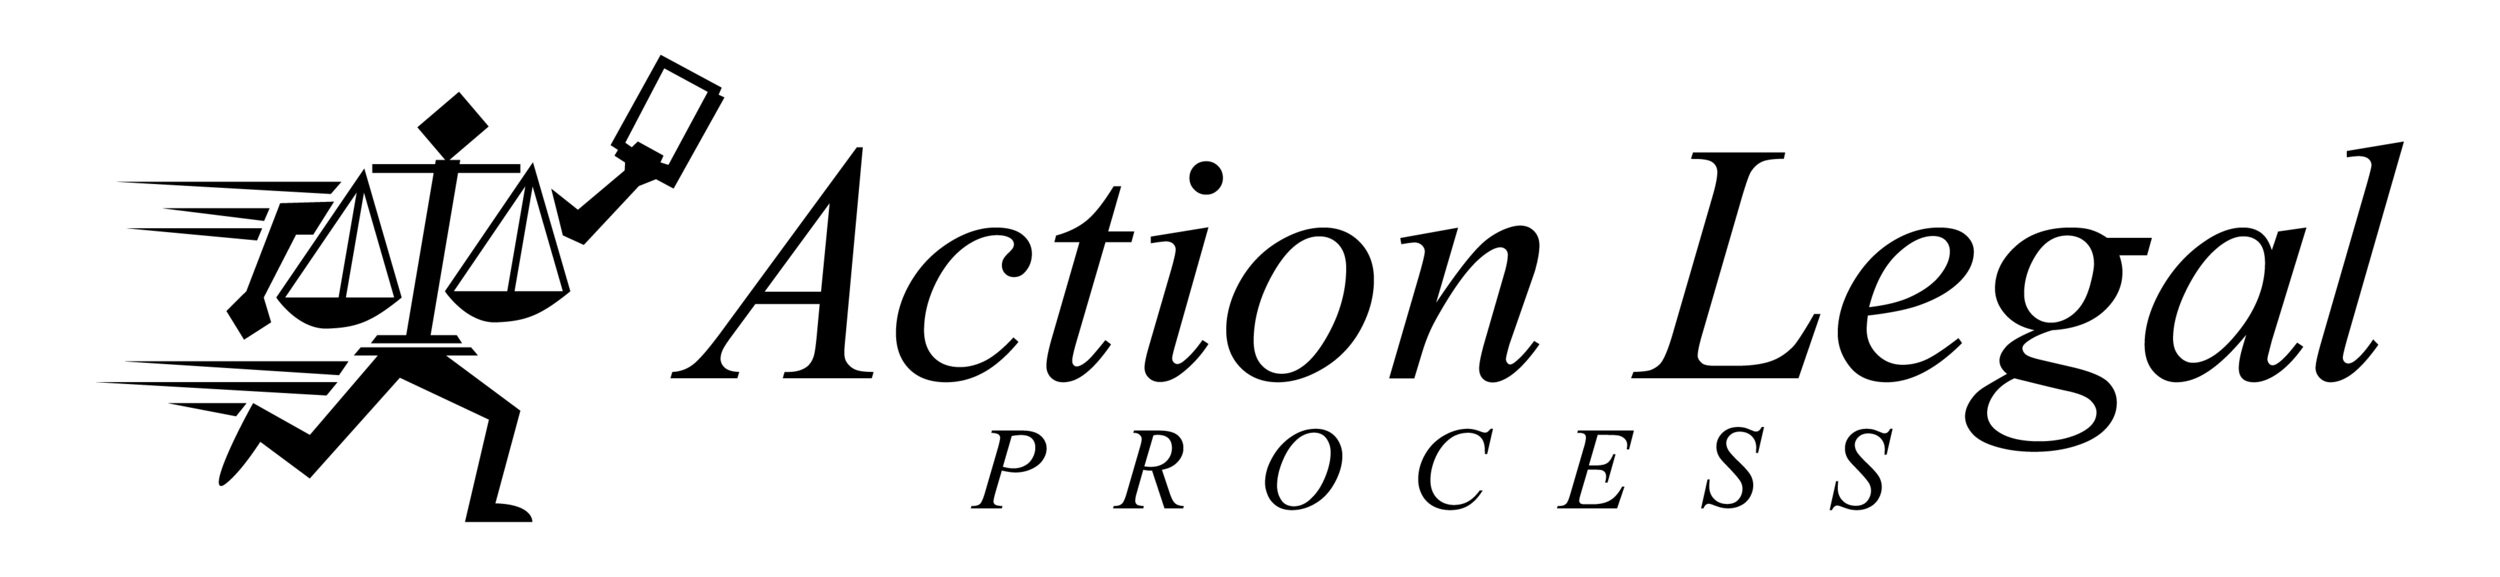 Action Legal Process Server